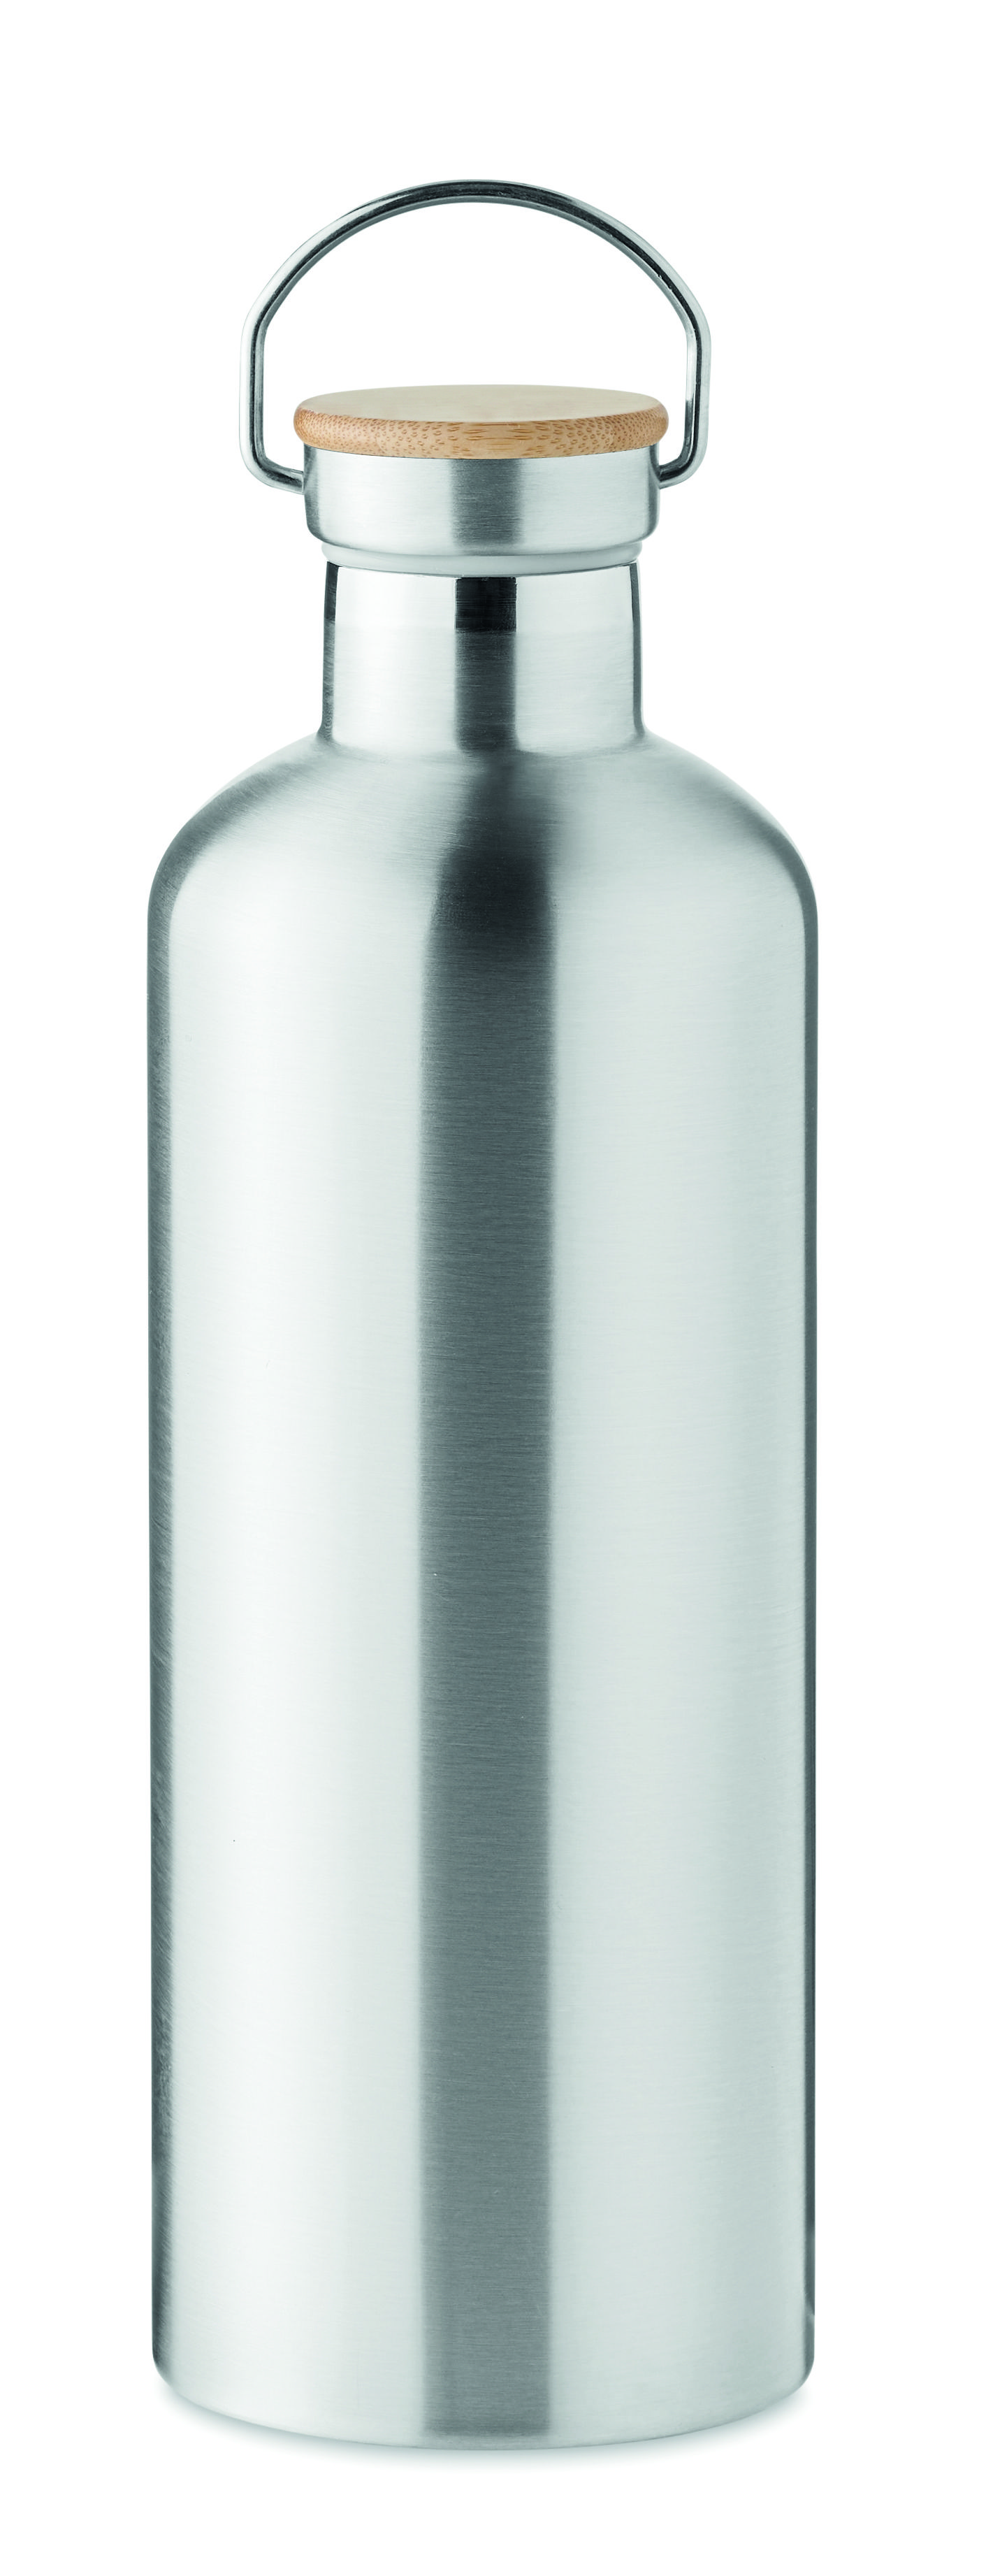 Botella Térmica Inox 1.5L desde 10.49 € - ¡Compra Ya! 🌡️✨